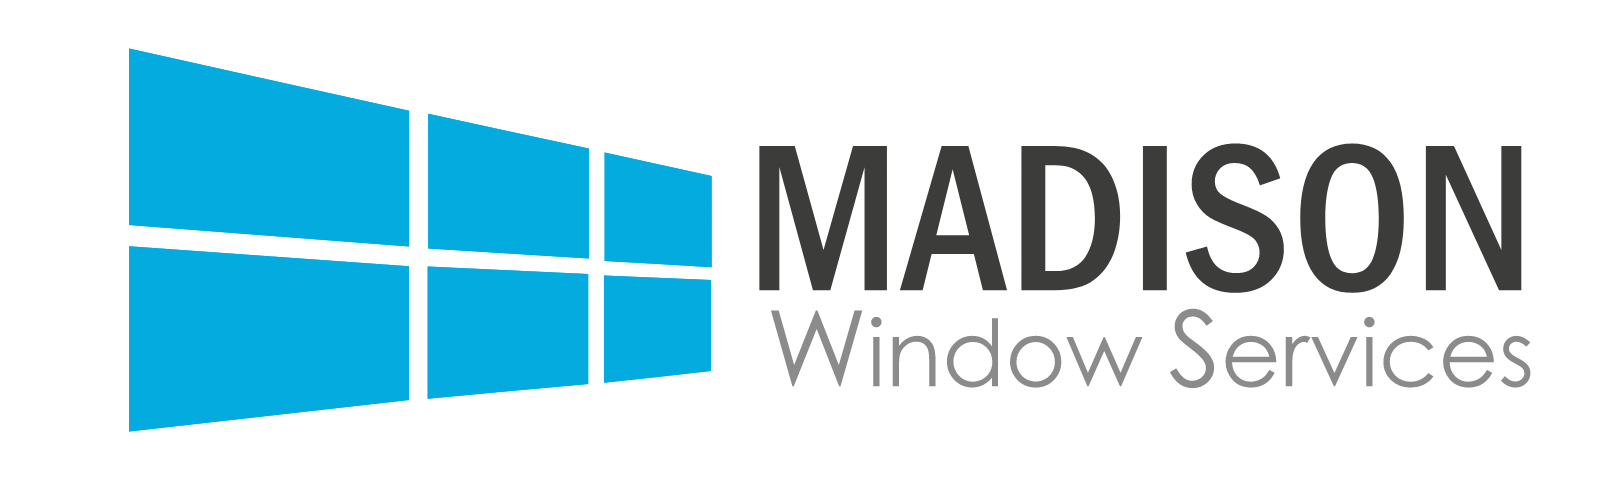 Madison Window Services